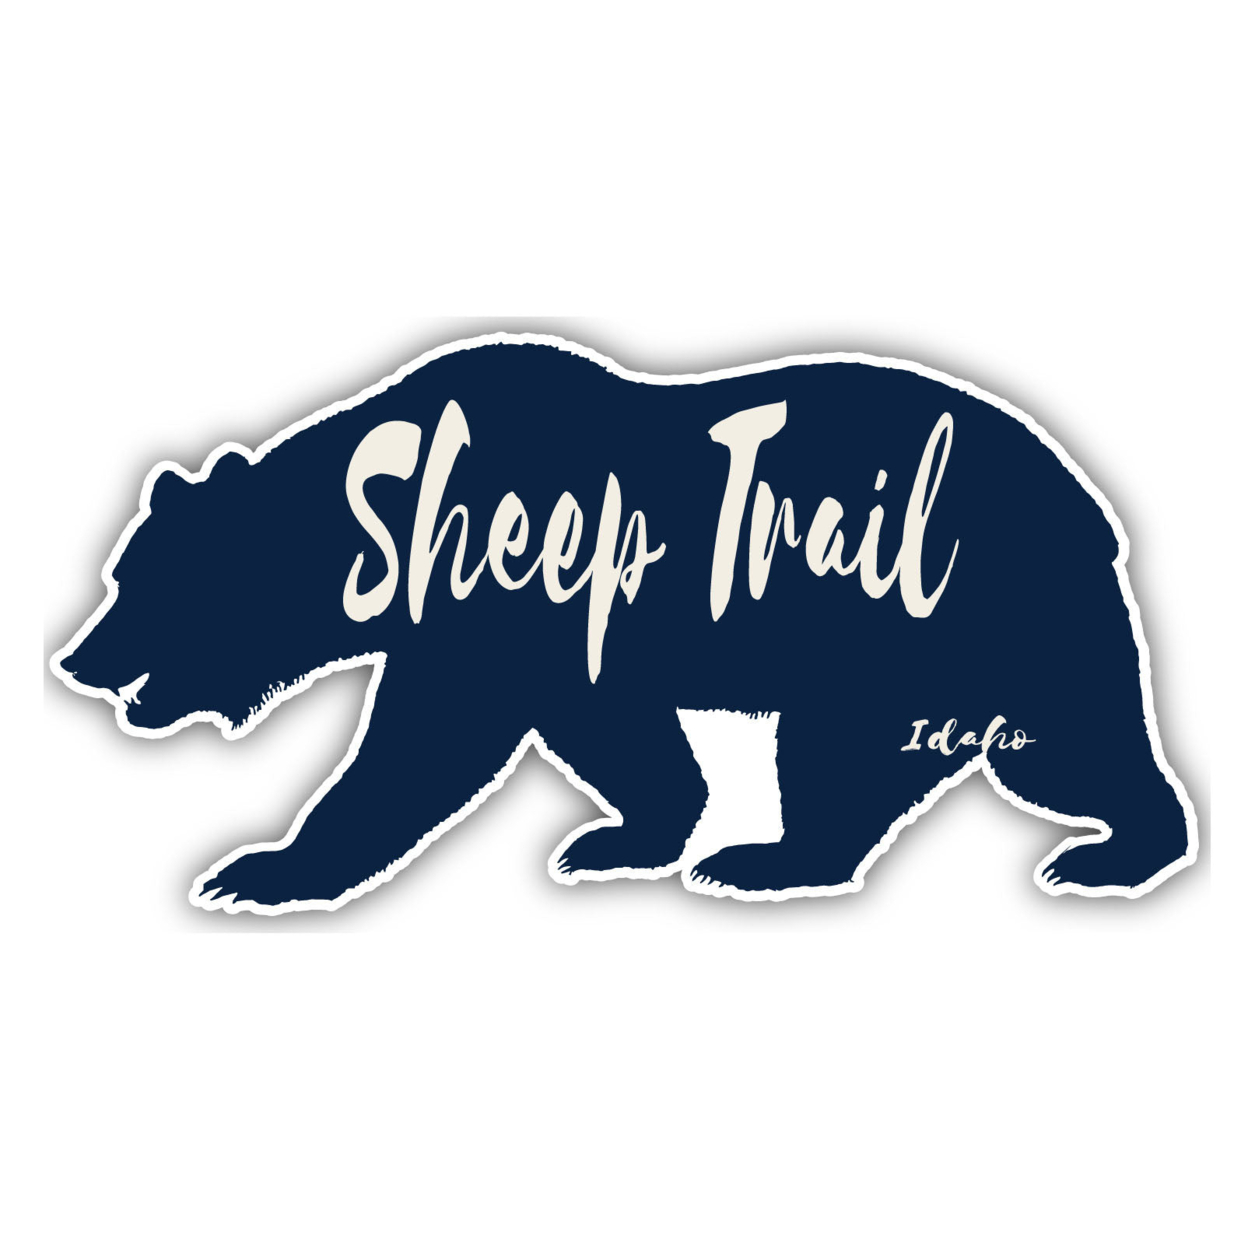 Sheep Trail Idaho Souvenir Decorative Stickers (Choose Theme And Size) - Single Unit, 4-Inch, Bear